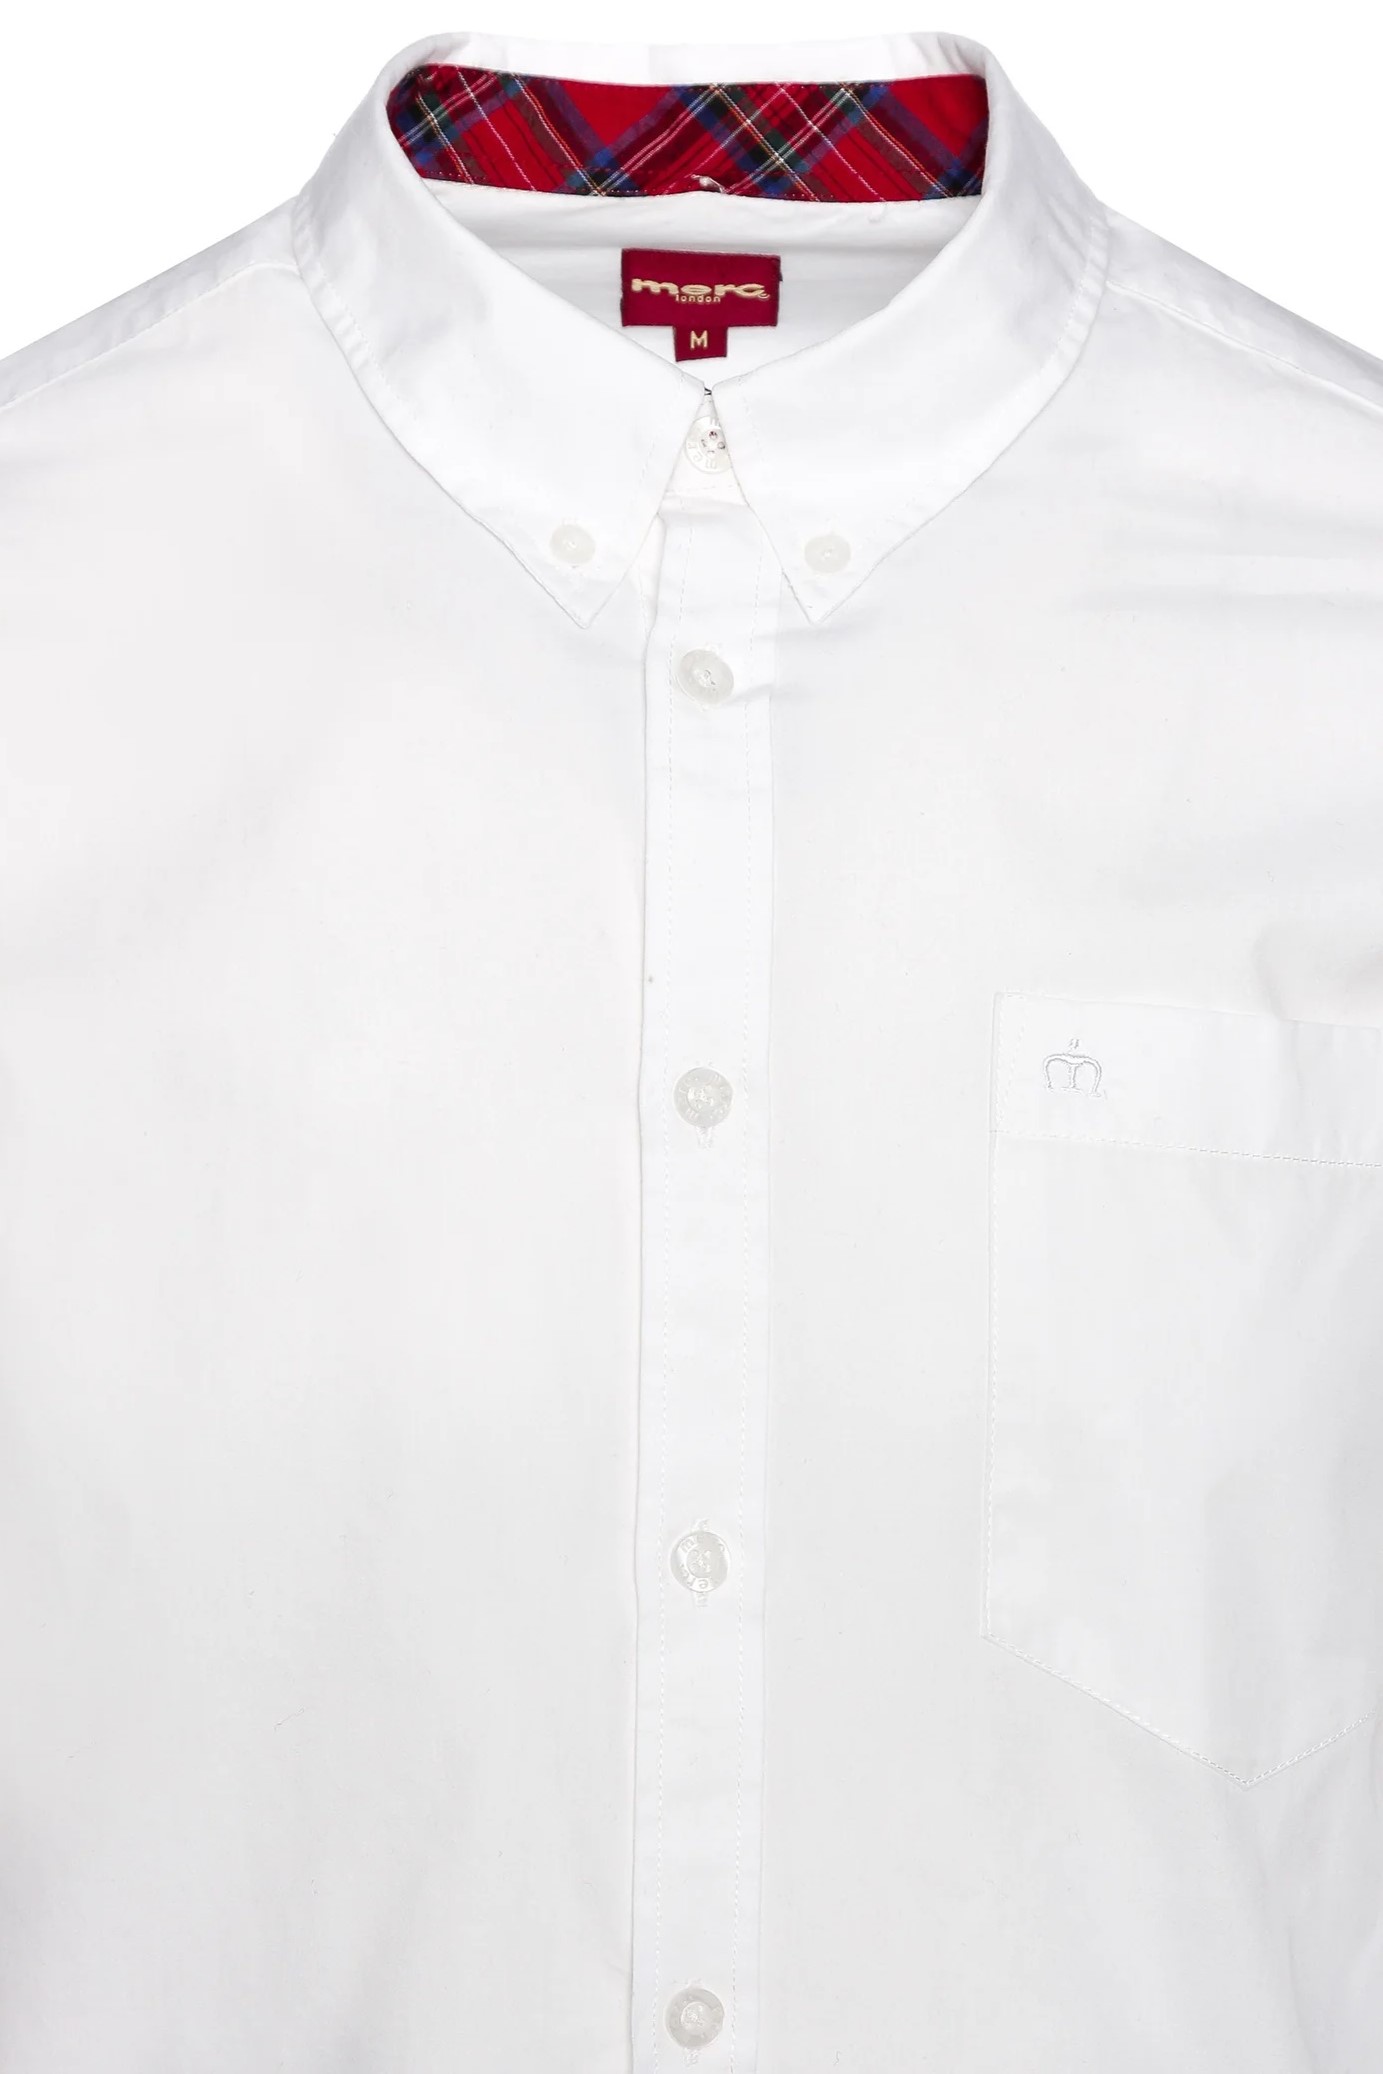 Рубашка Merc Baxter, white (белая), с коротким рукавом